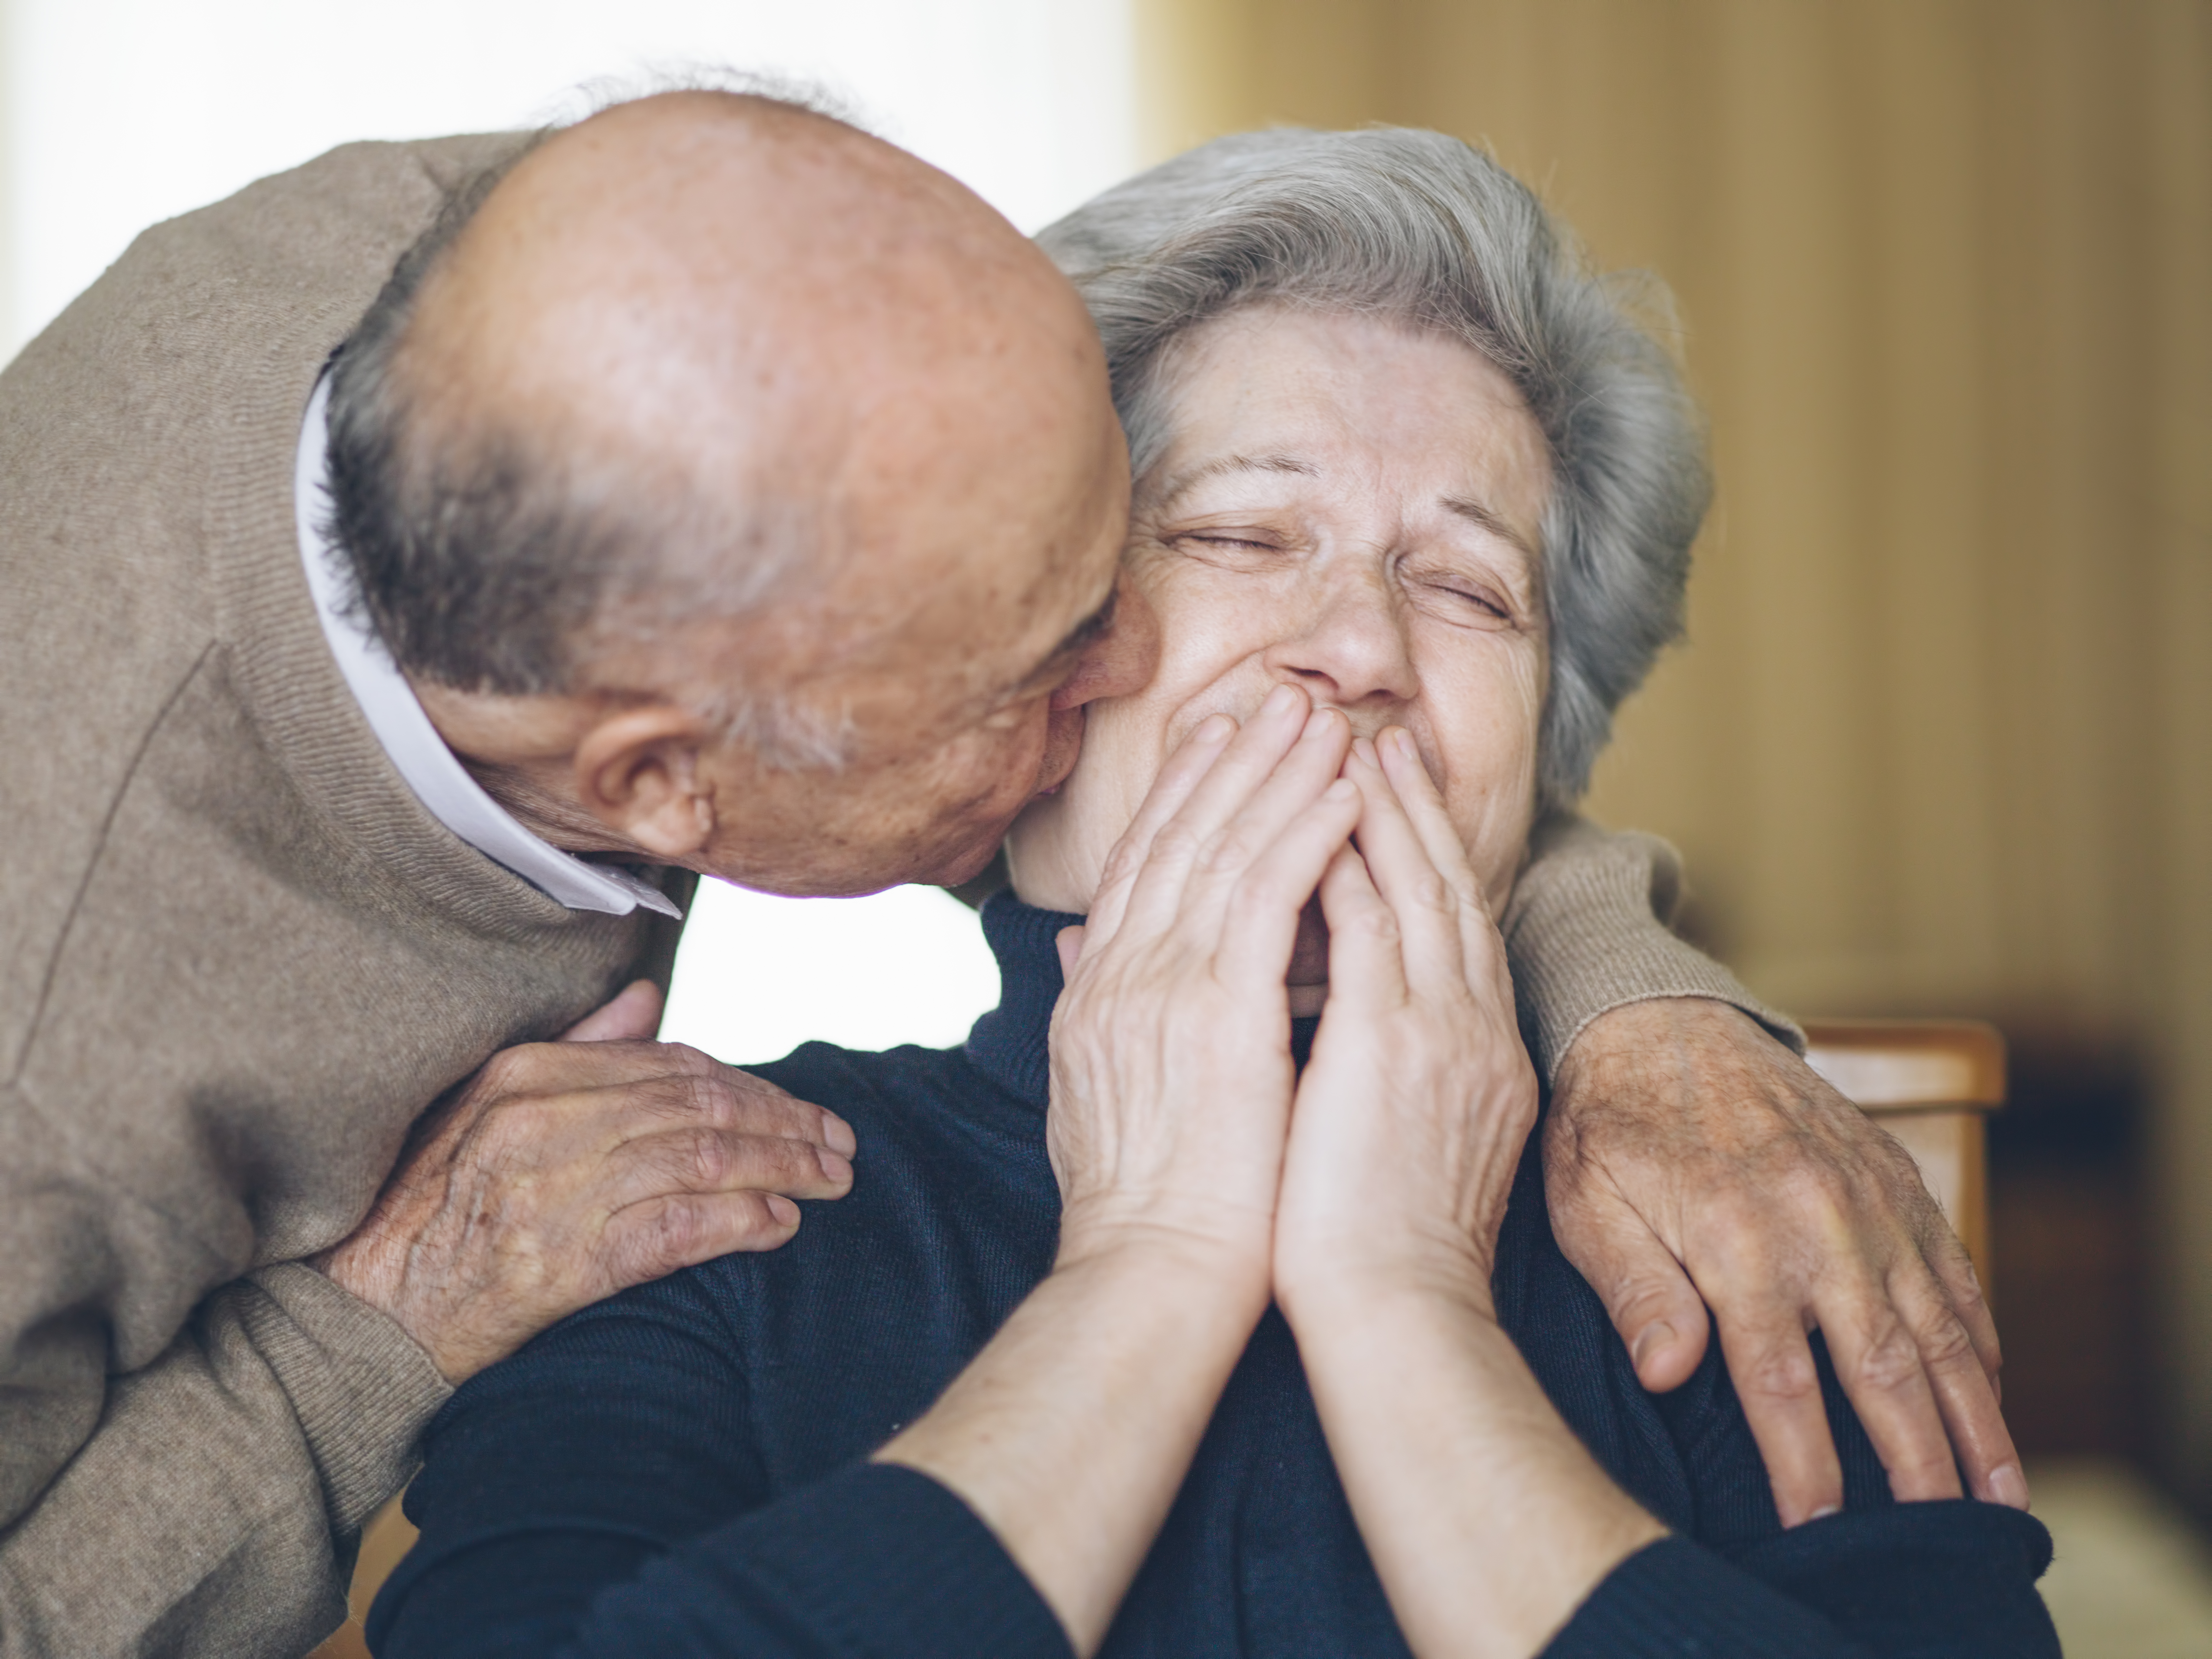 Senior couple having fun | Source: Getty Images